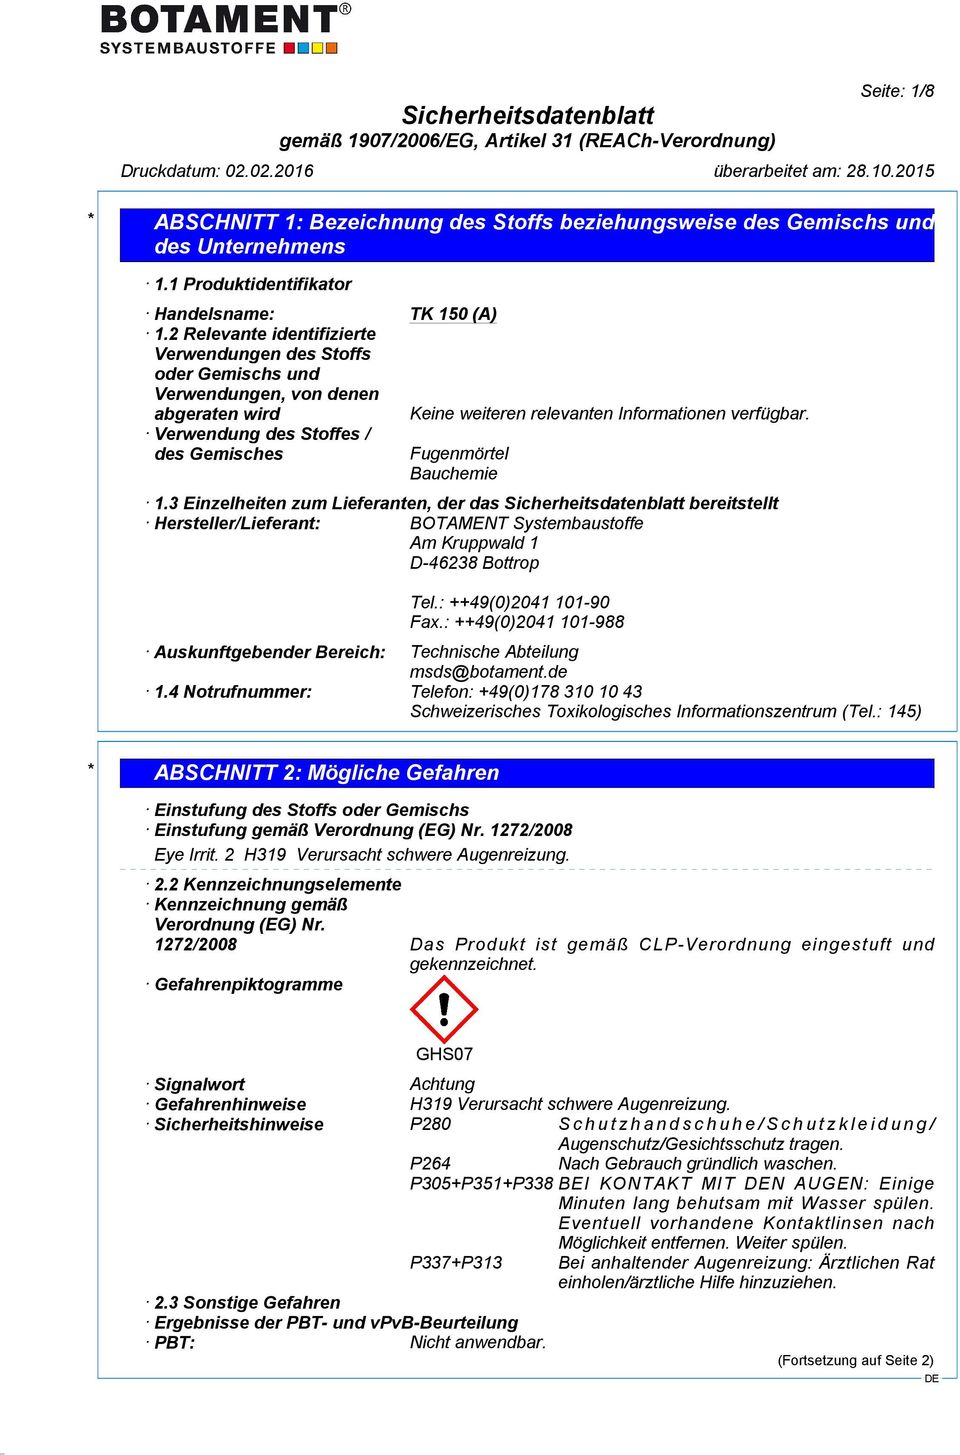 3 Einzelheiten zum Lieferanten, der das bereitstellt Hersteller/Lieferant: BOTAMENT Systembaustoffe Am Kruppwald 1 D-46238 Bottrop Tel.: ++49(0)2041 101-90 Fax.